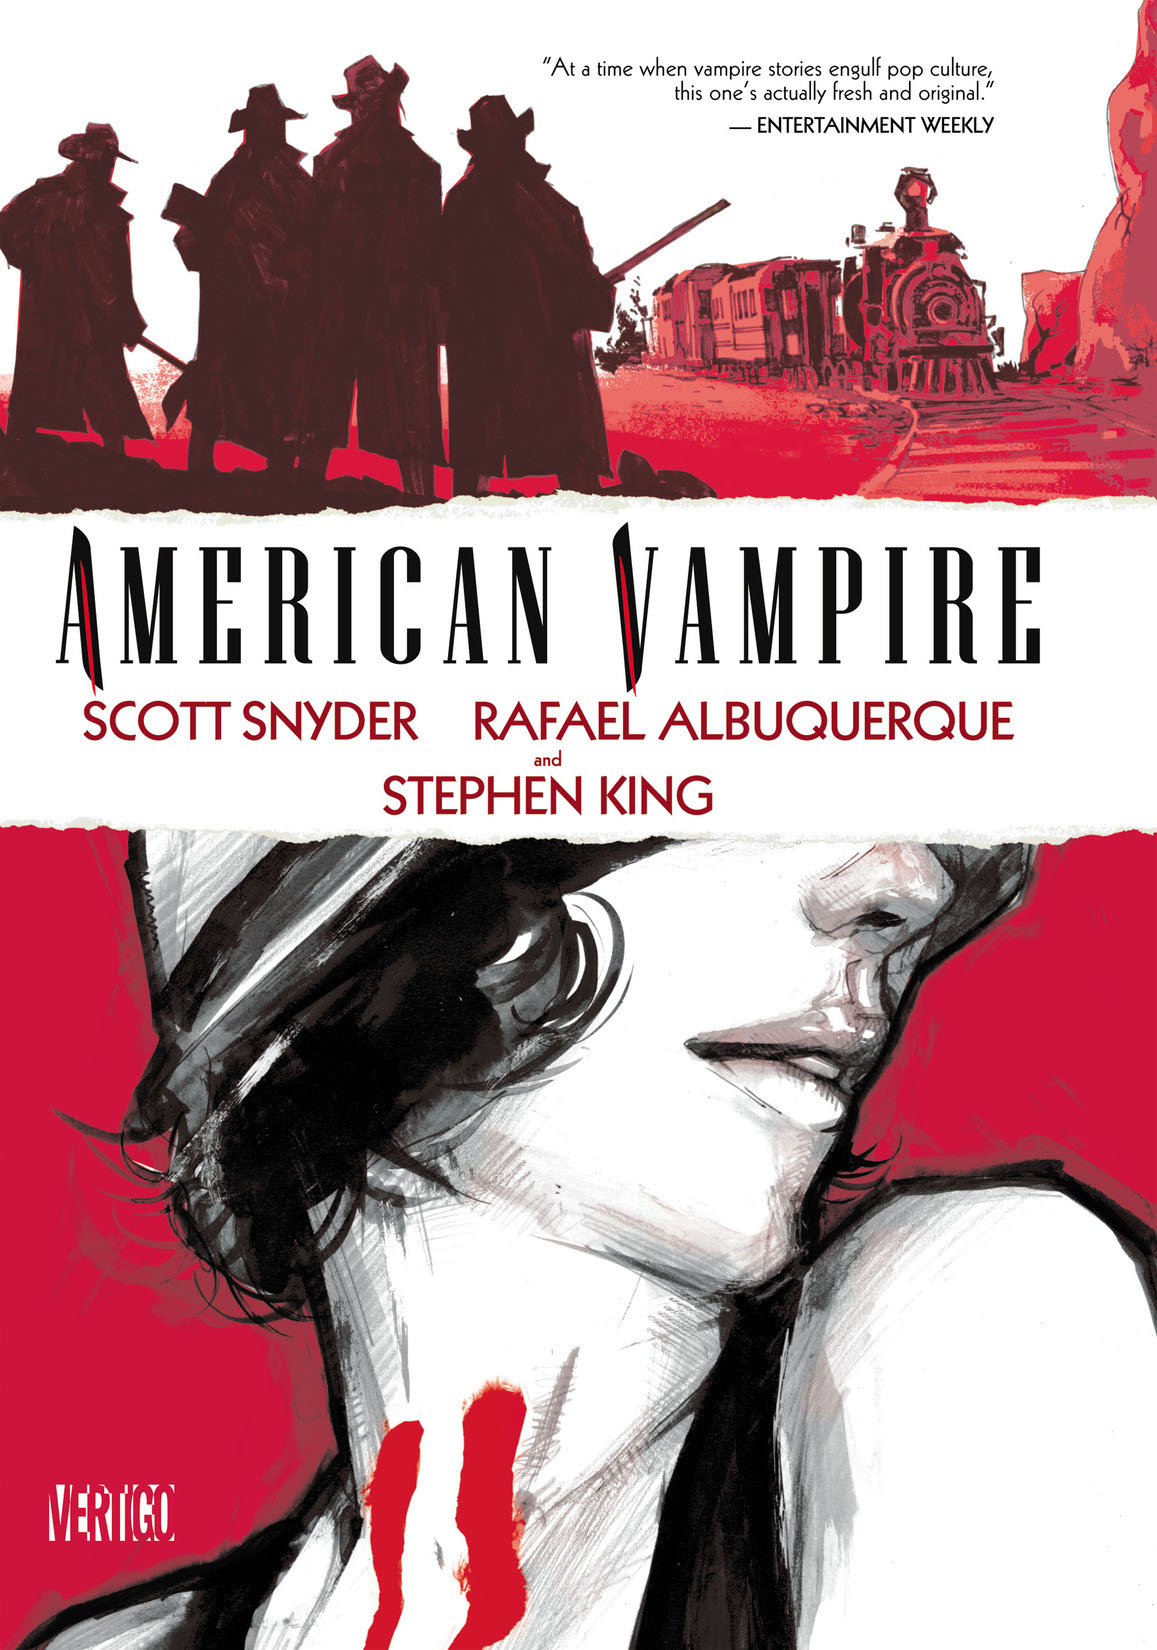 American Vampire Vol. 1 preview images